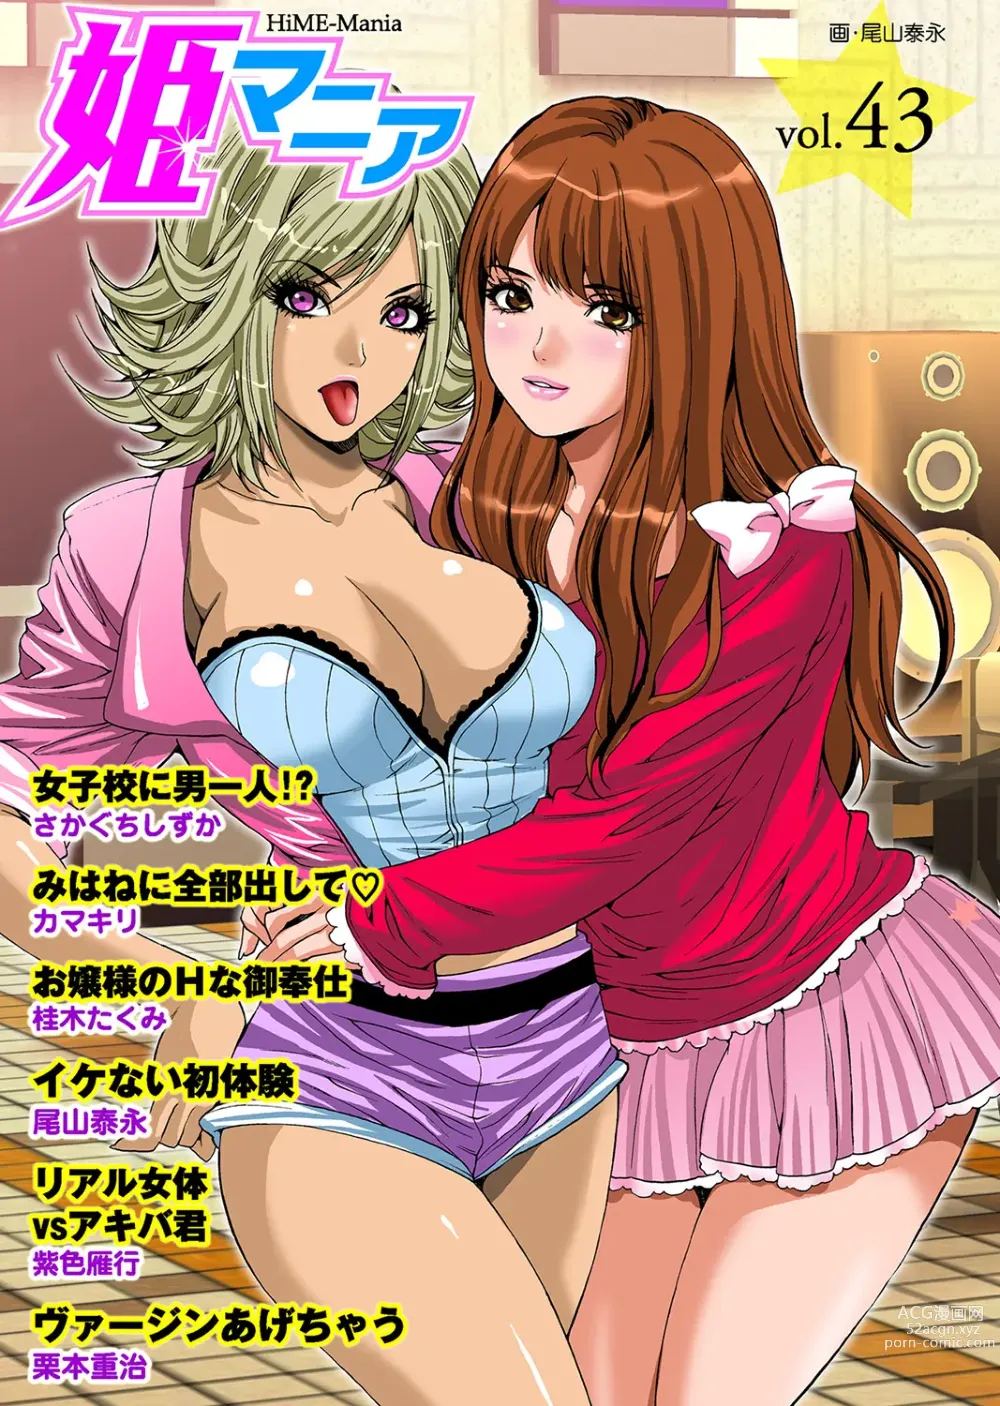 Page 1 of manga HiME-Mania Vol. 43